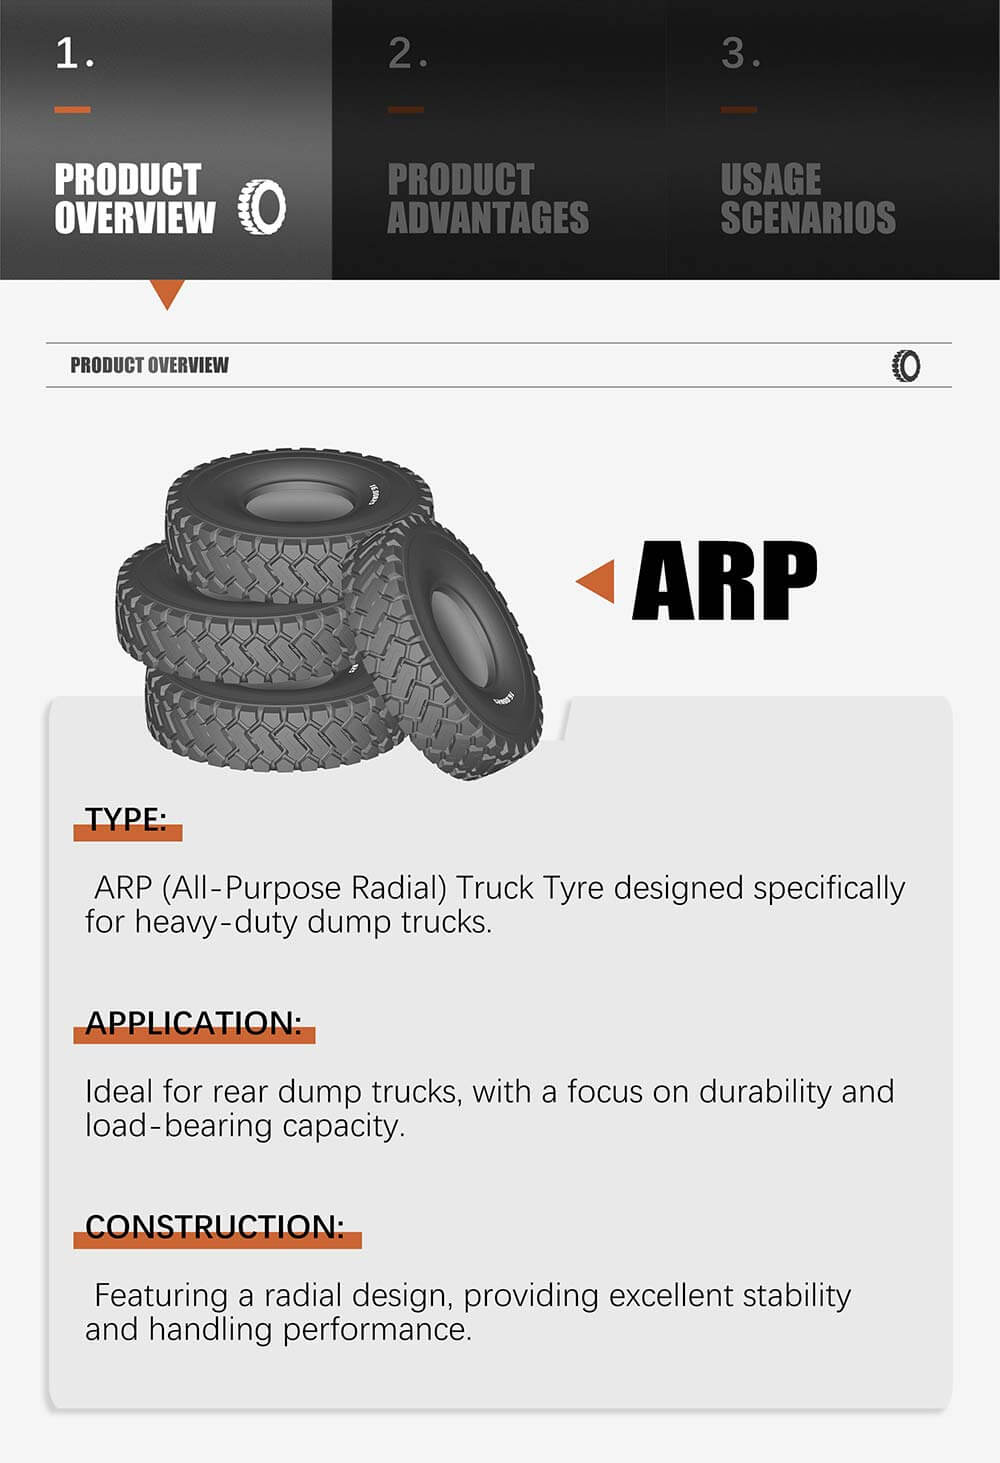 Heavy Dump ARP Truck Tyre